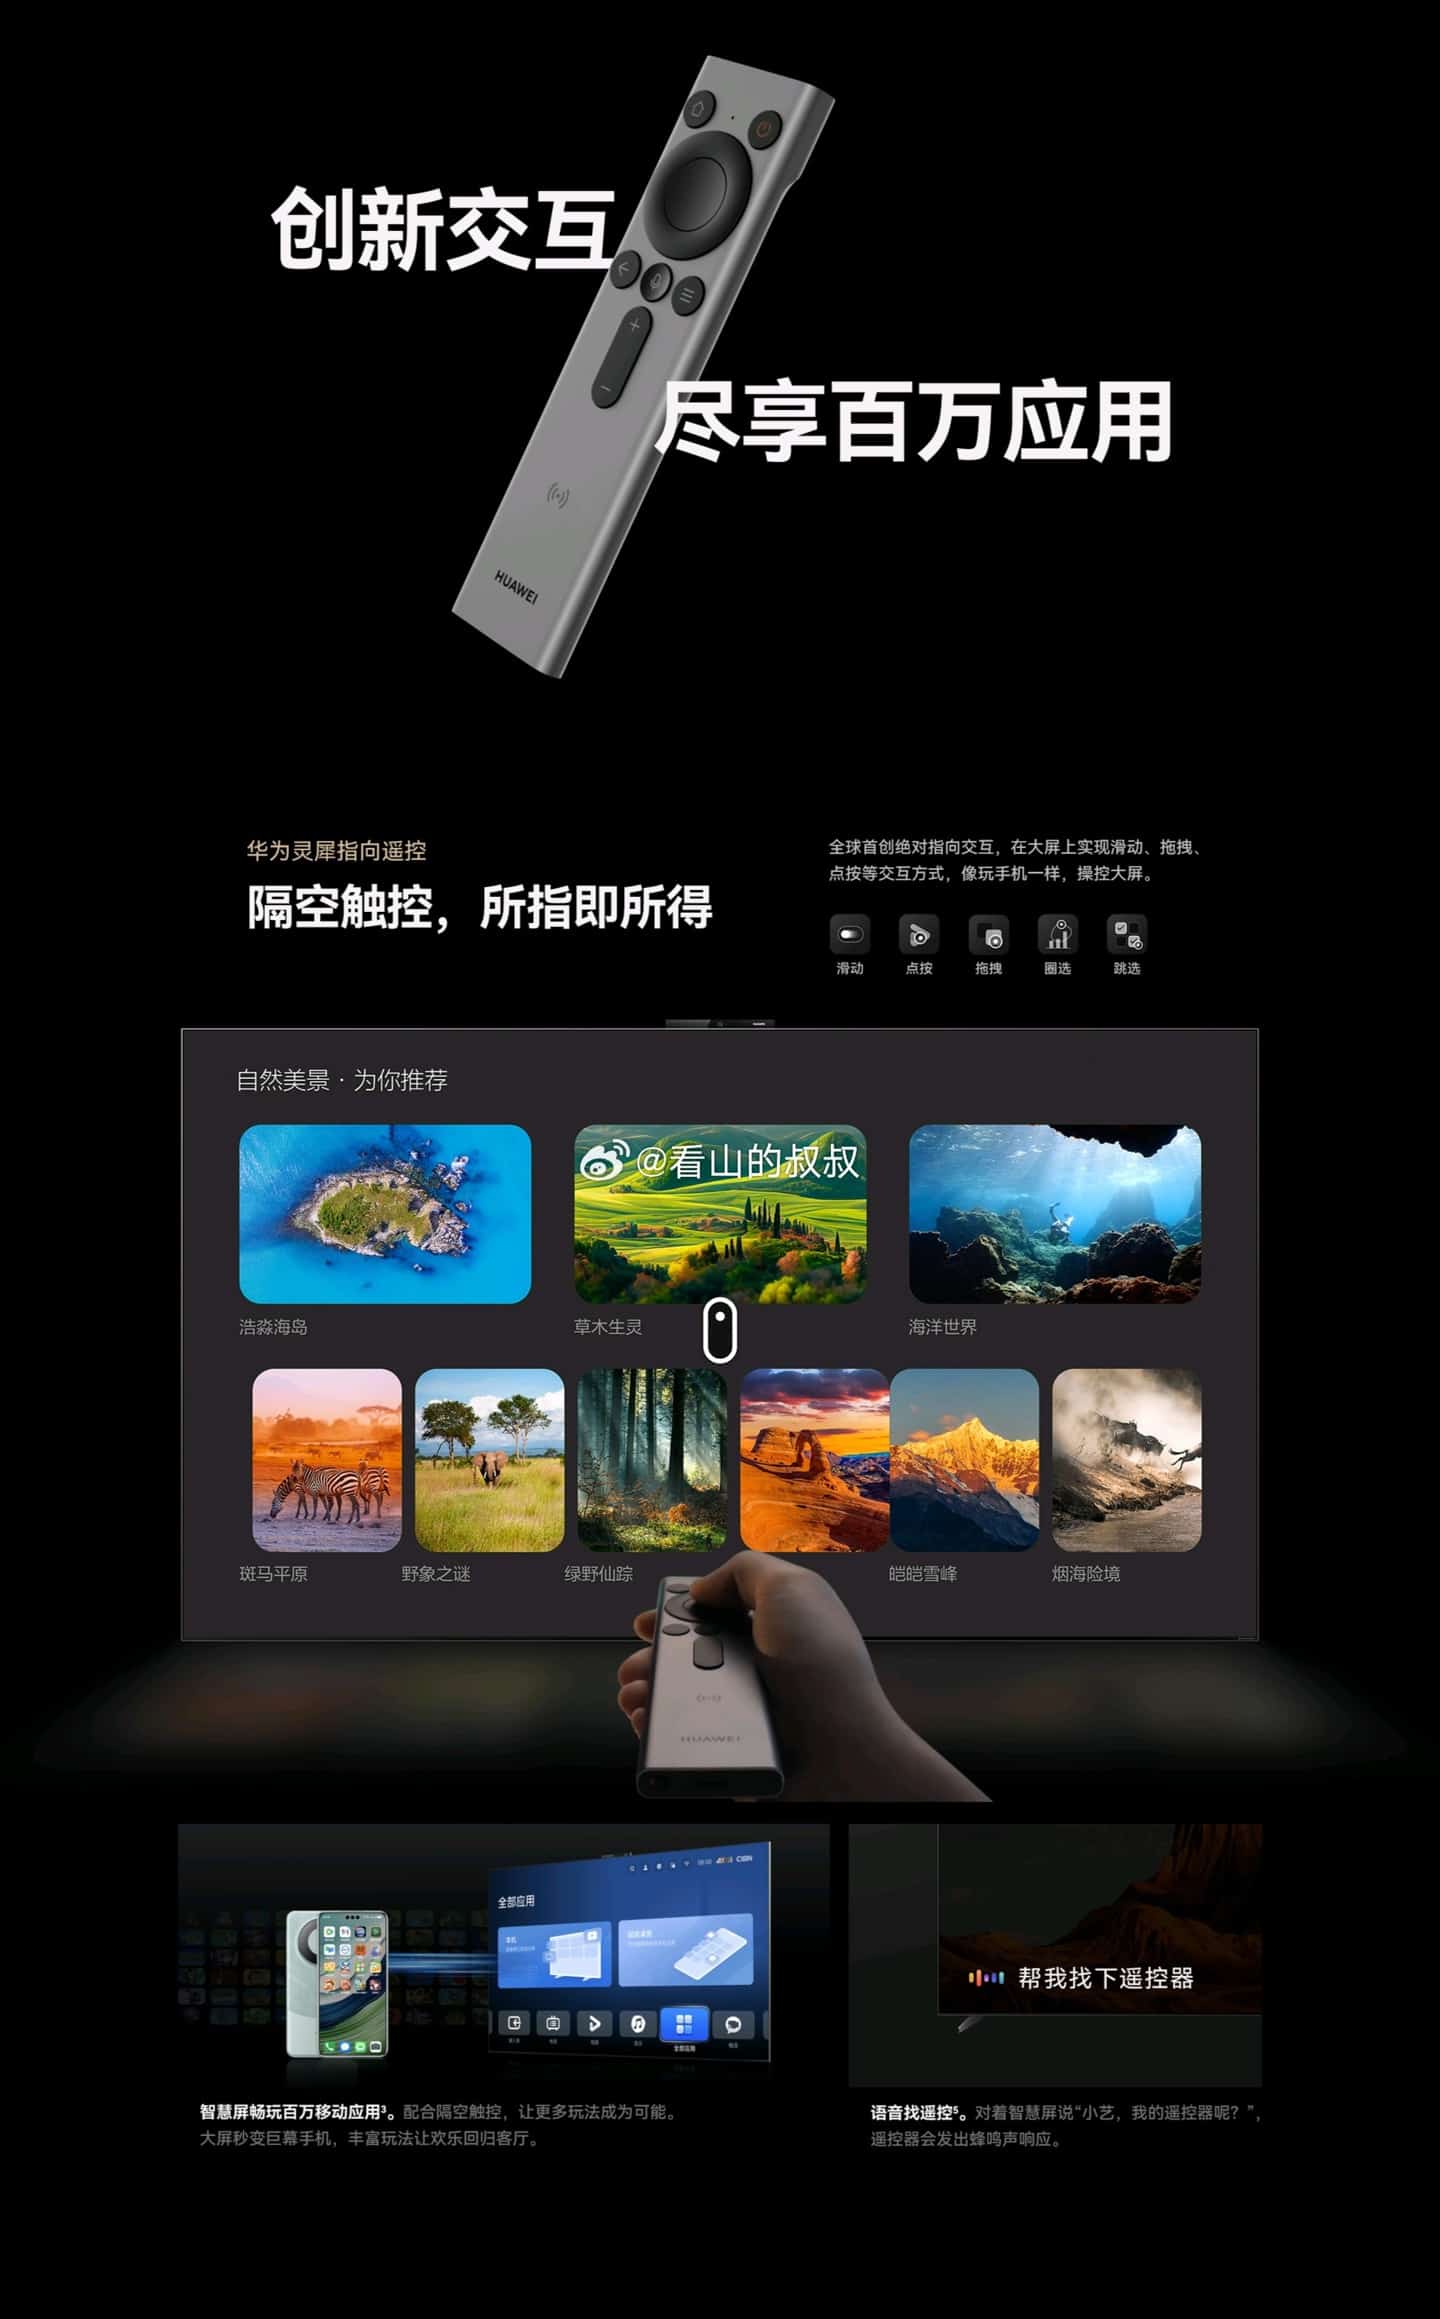 Huawei Lingxi Air Remote Control